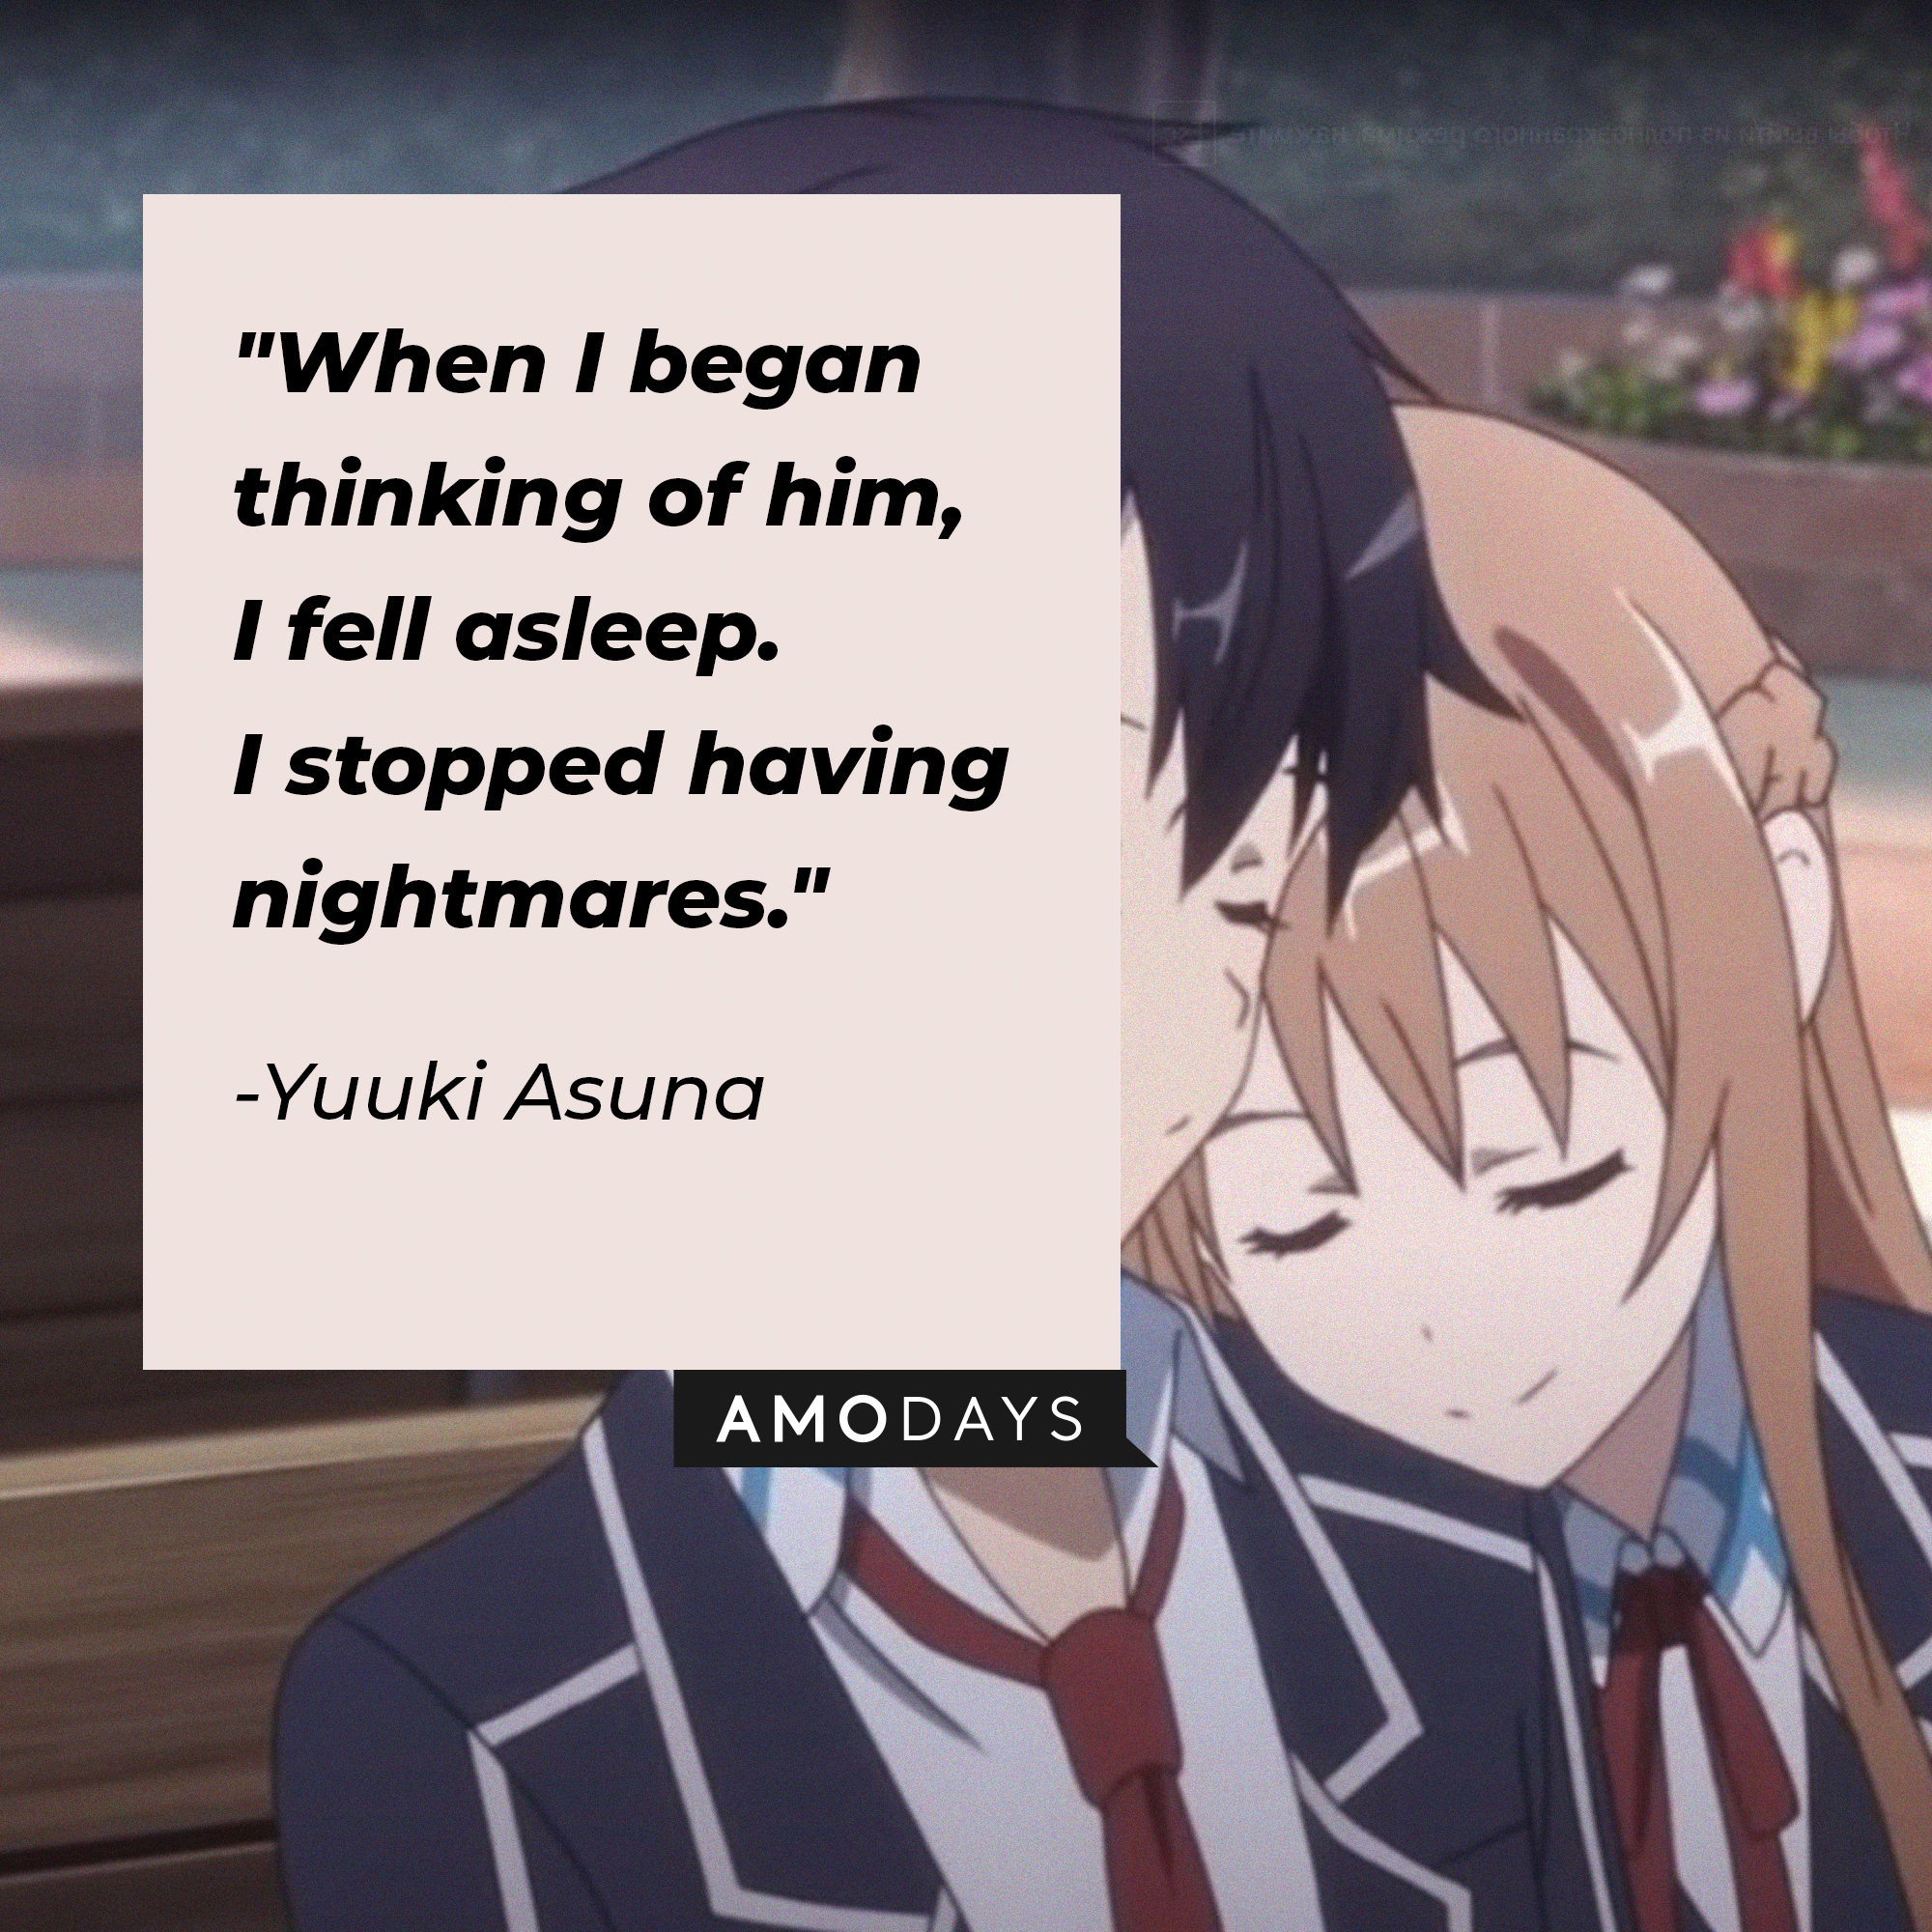 Yuuki Asuna's quote: "When I began thinking of him, I fell asleep. I stopped having nightmares." | Source: Facebook.com/SwordArtOnlineUSA